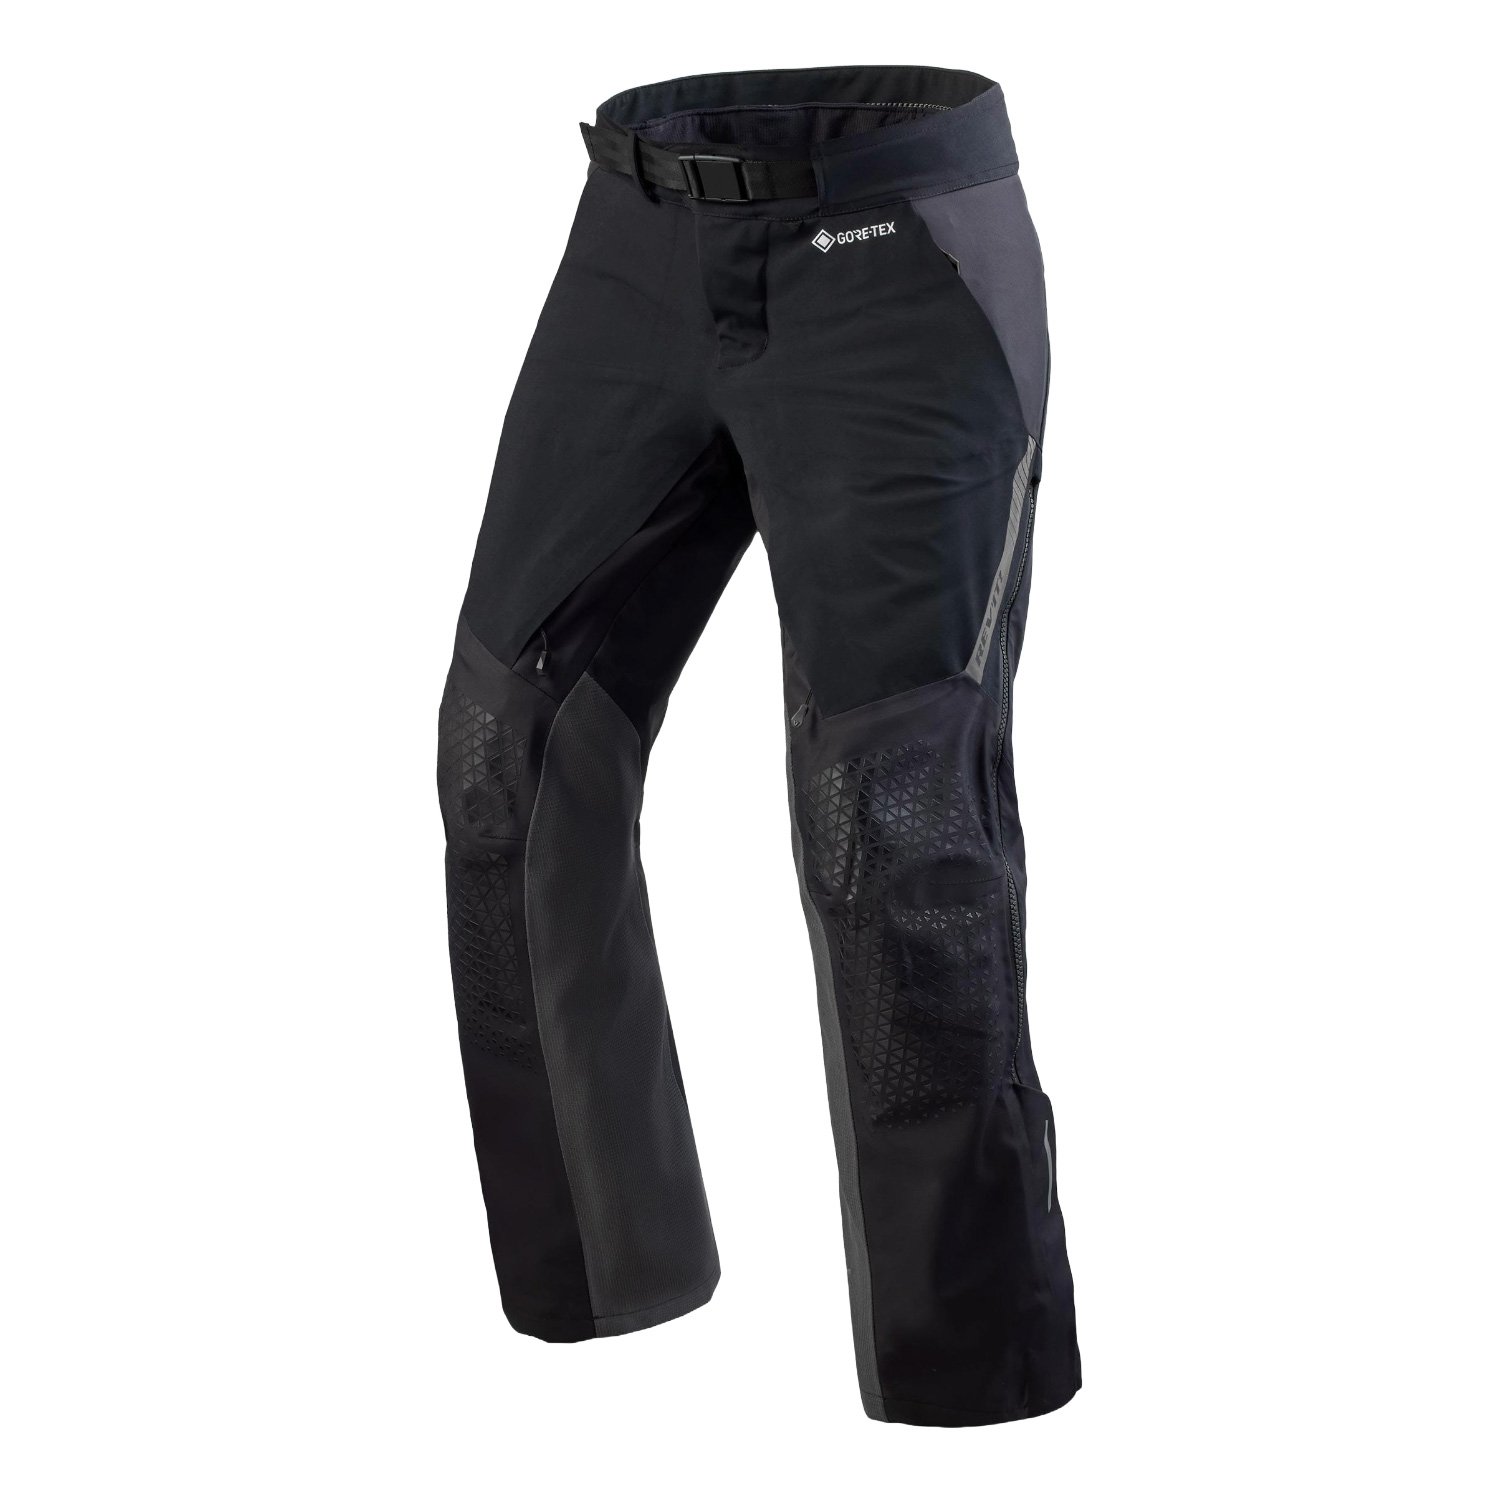 Image of REV'IT! Stratum GTX Black Grey Short Motorcycle Pants Size 2XL ID 8700001351232